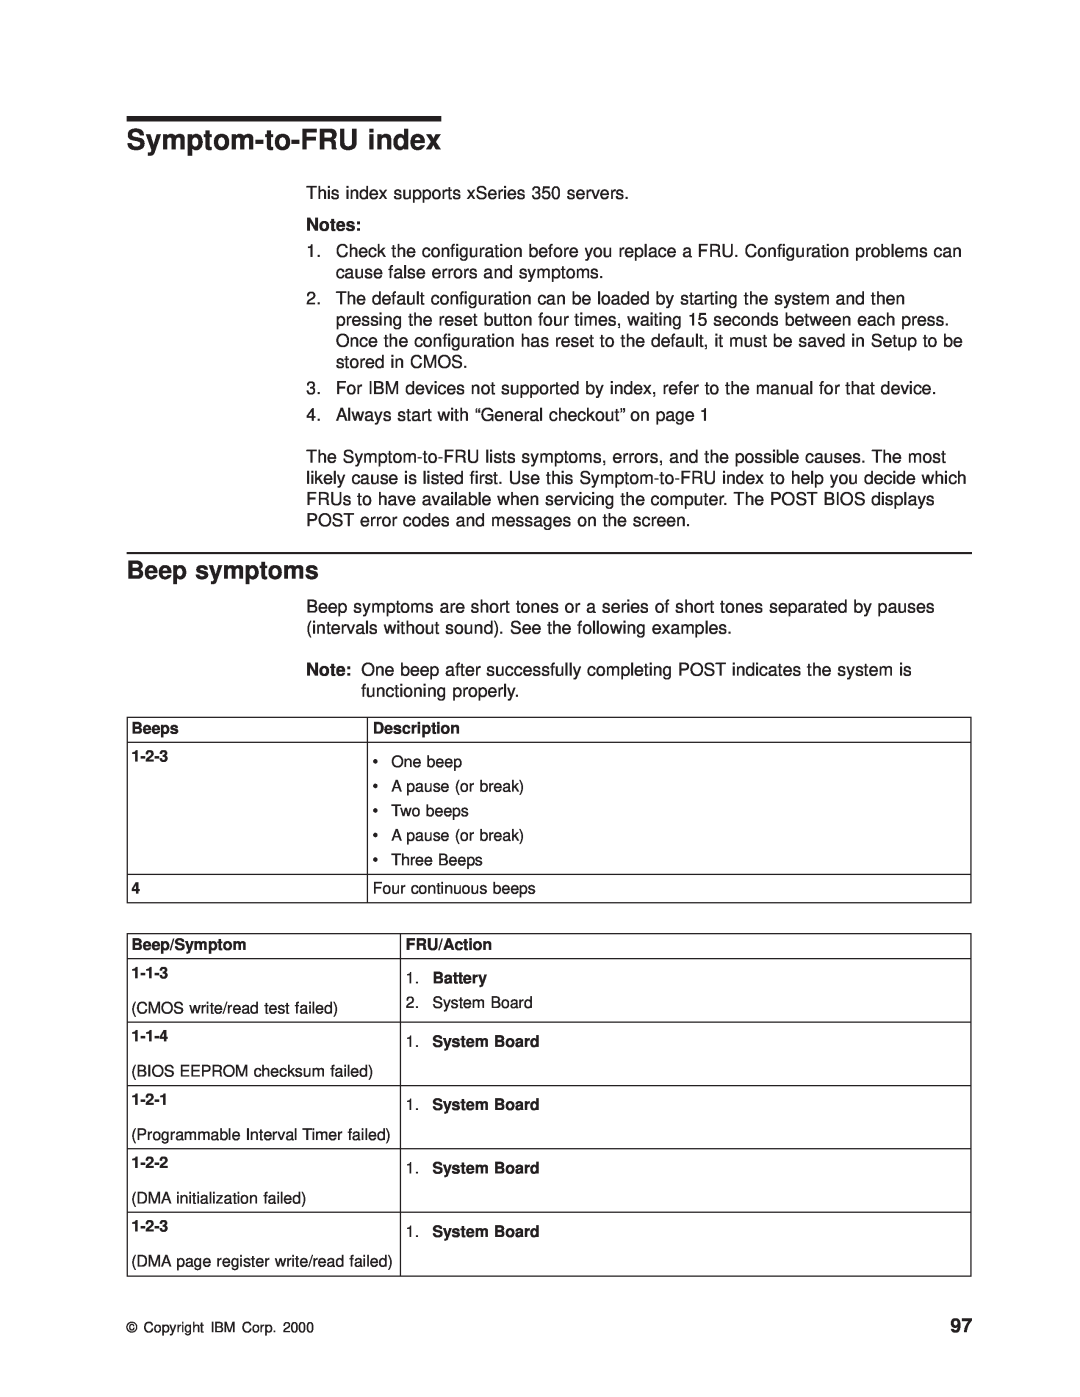 IBM 8682 manual Symptom-to-FRU index, Beep symptoms 